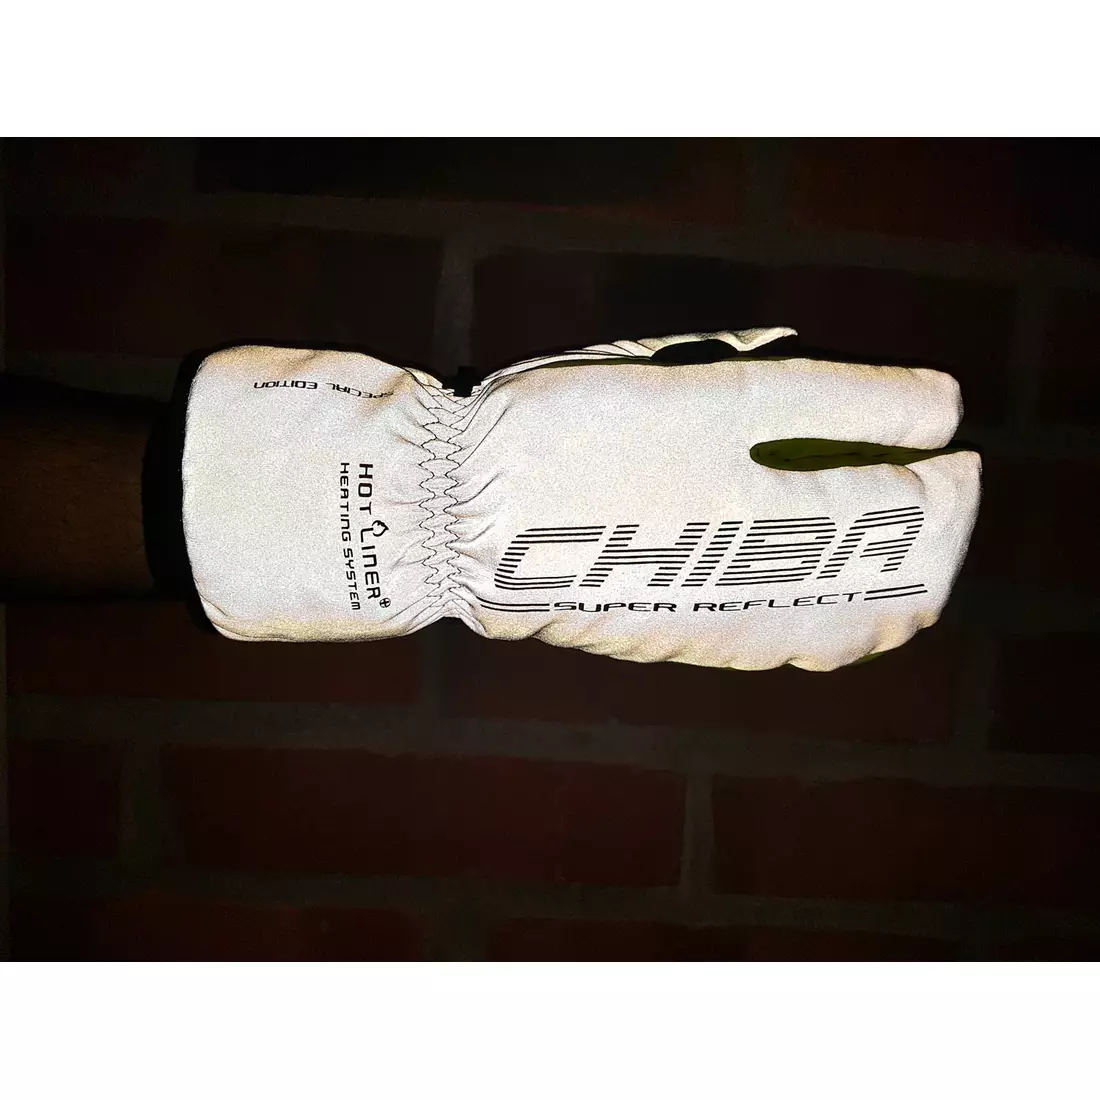 CHIBA ALASKA PLUS 2017 winter cycling gloves silver